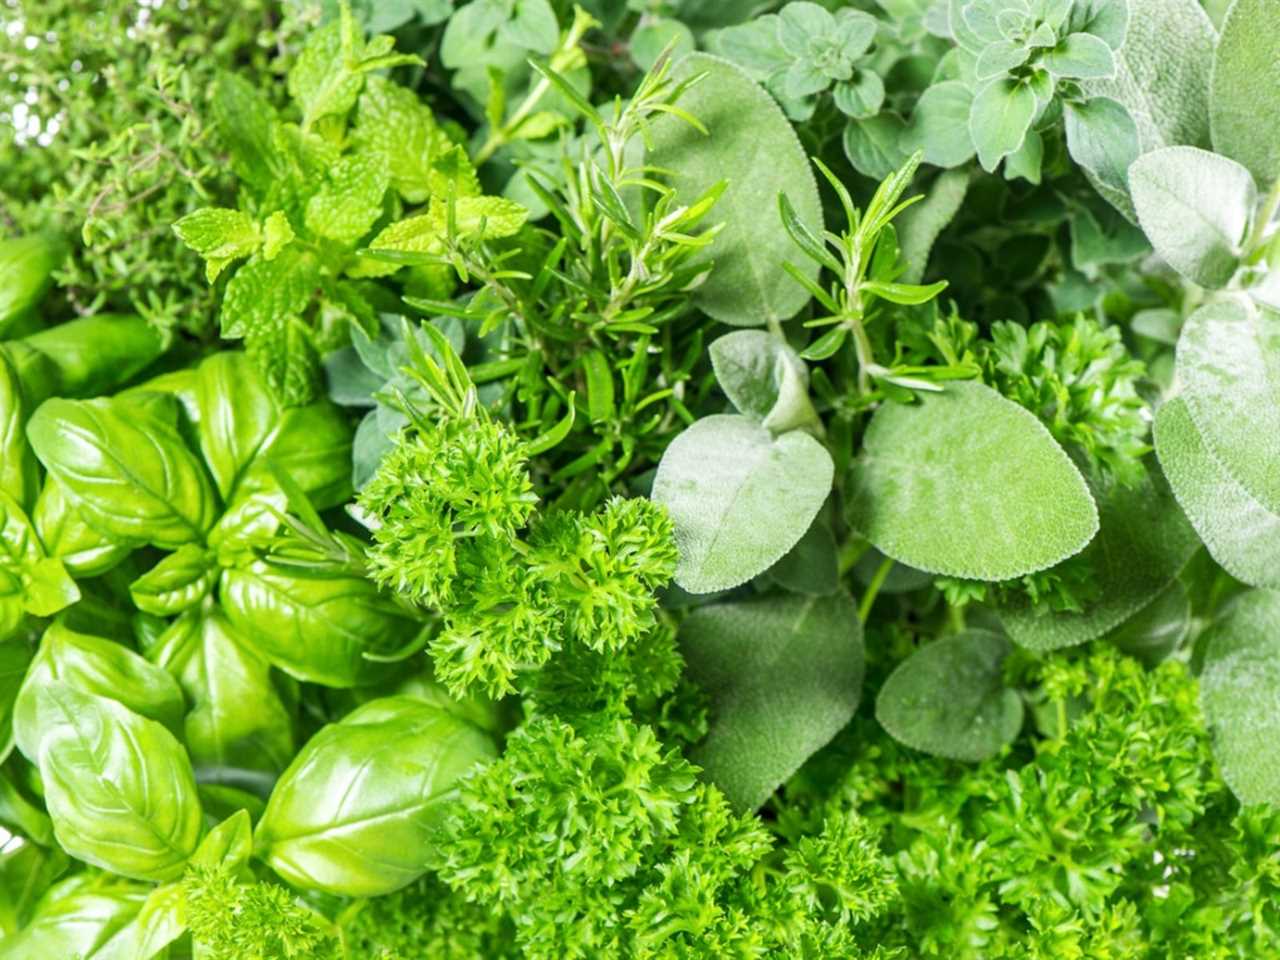 Creating An Apothecary From The Garden / Homesteading / Herbal Medicine Herbs